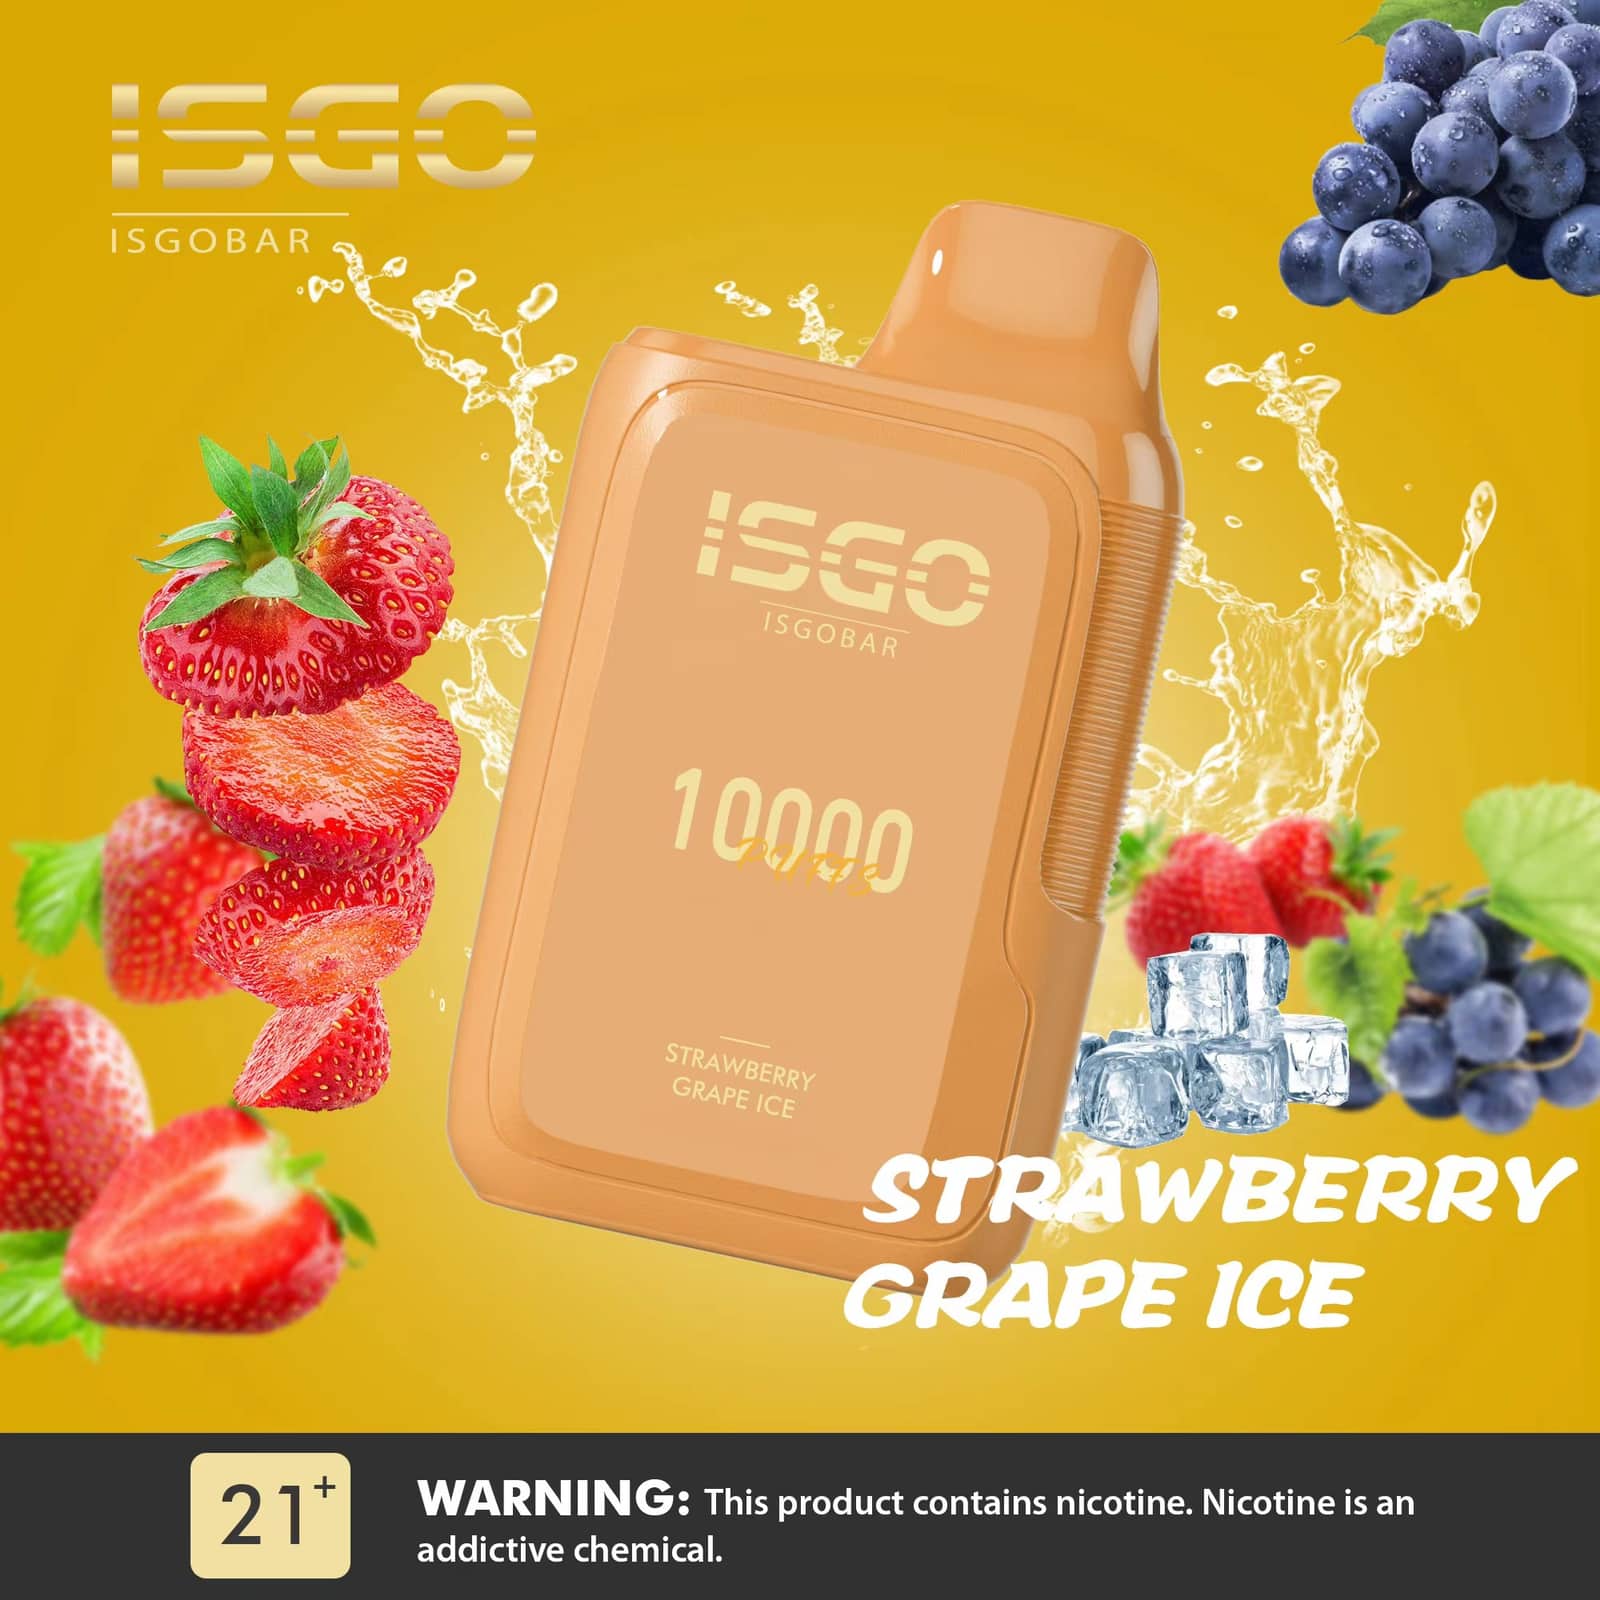 ISGO BAR 10000 - STRAWBERRY GRAPE ICE